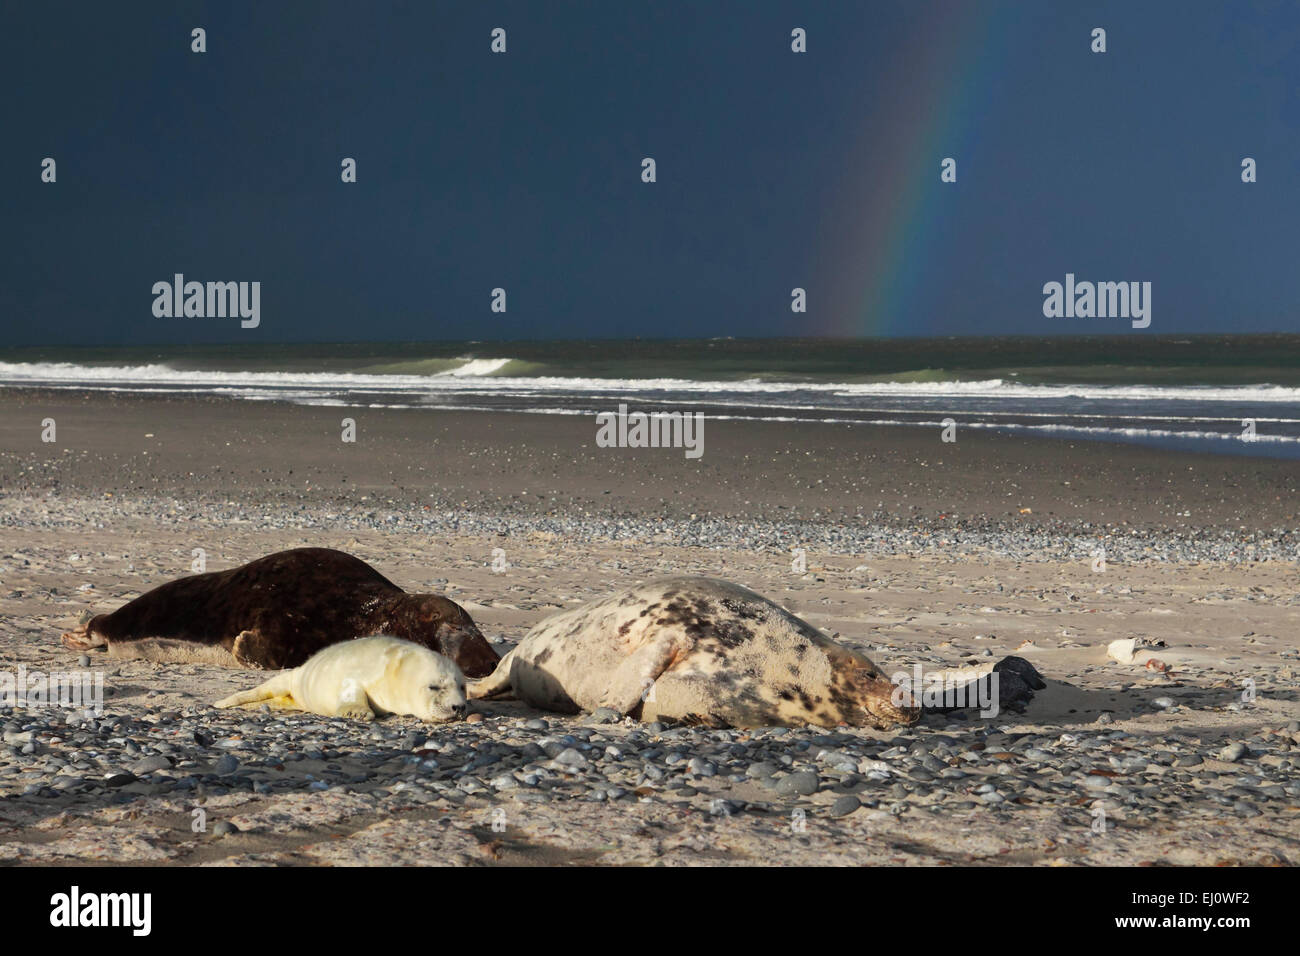 Bull, Germany, Europe, family, Halichoerus grypus, Helgoland, dune, island, isle, grey seal, coast, Lanugo, sea, marine mammal, m Stock Photo